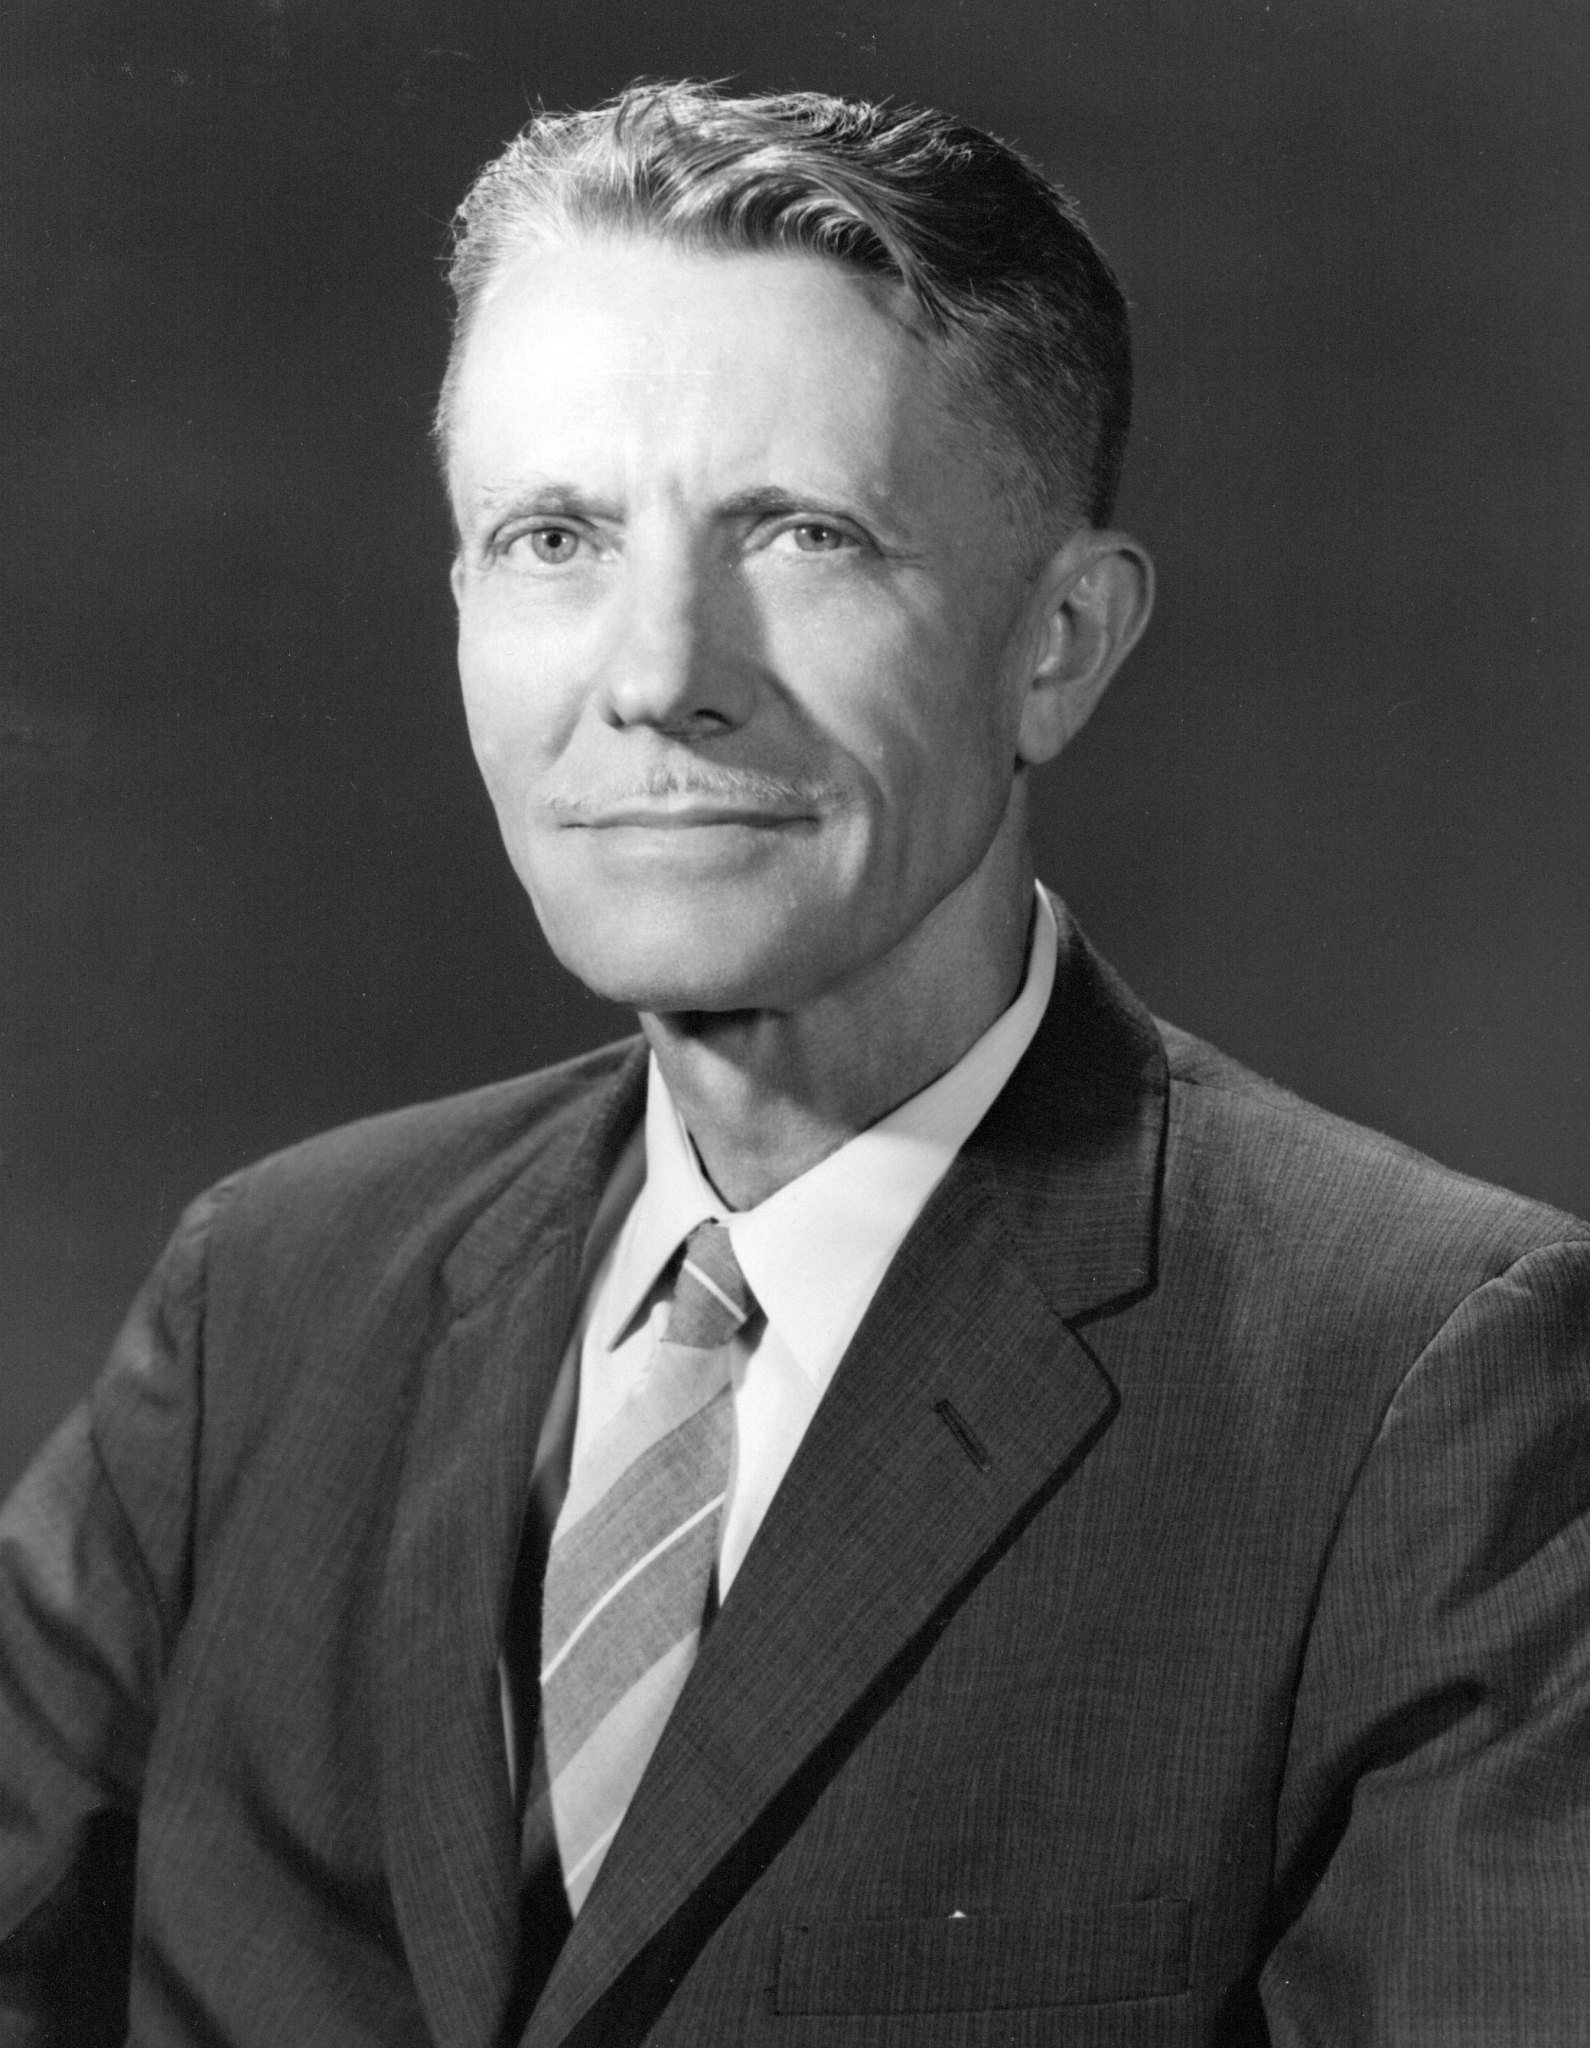 Floyd L. Thompson